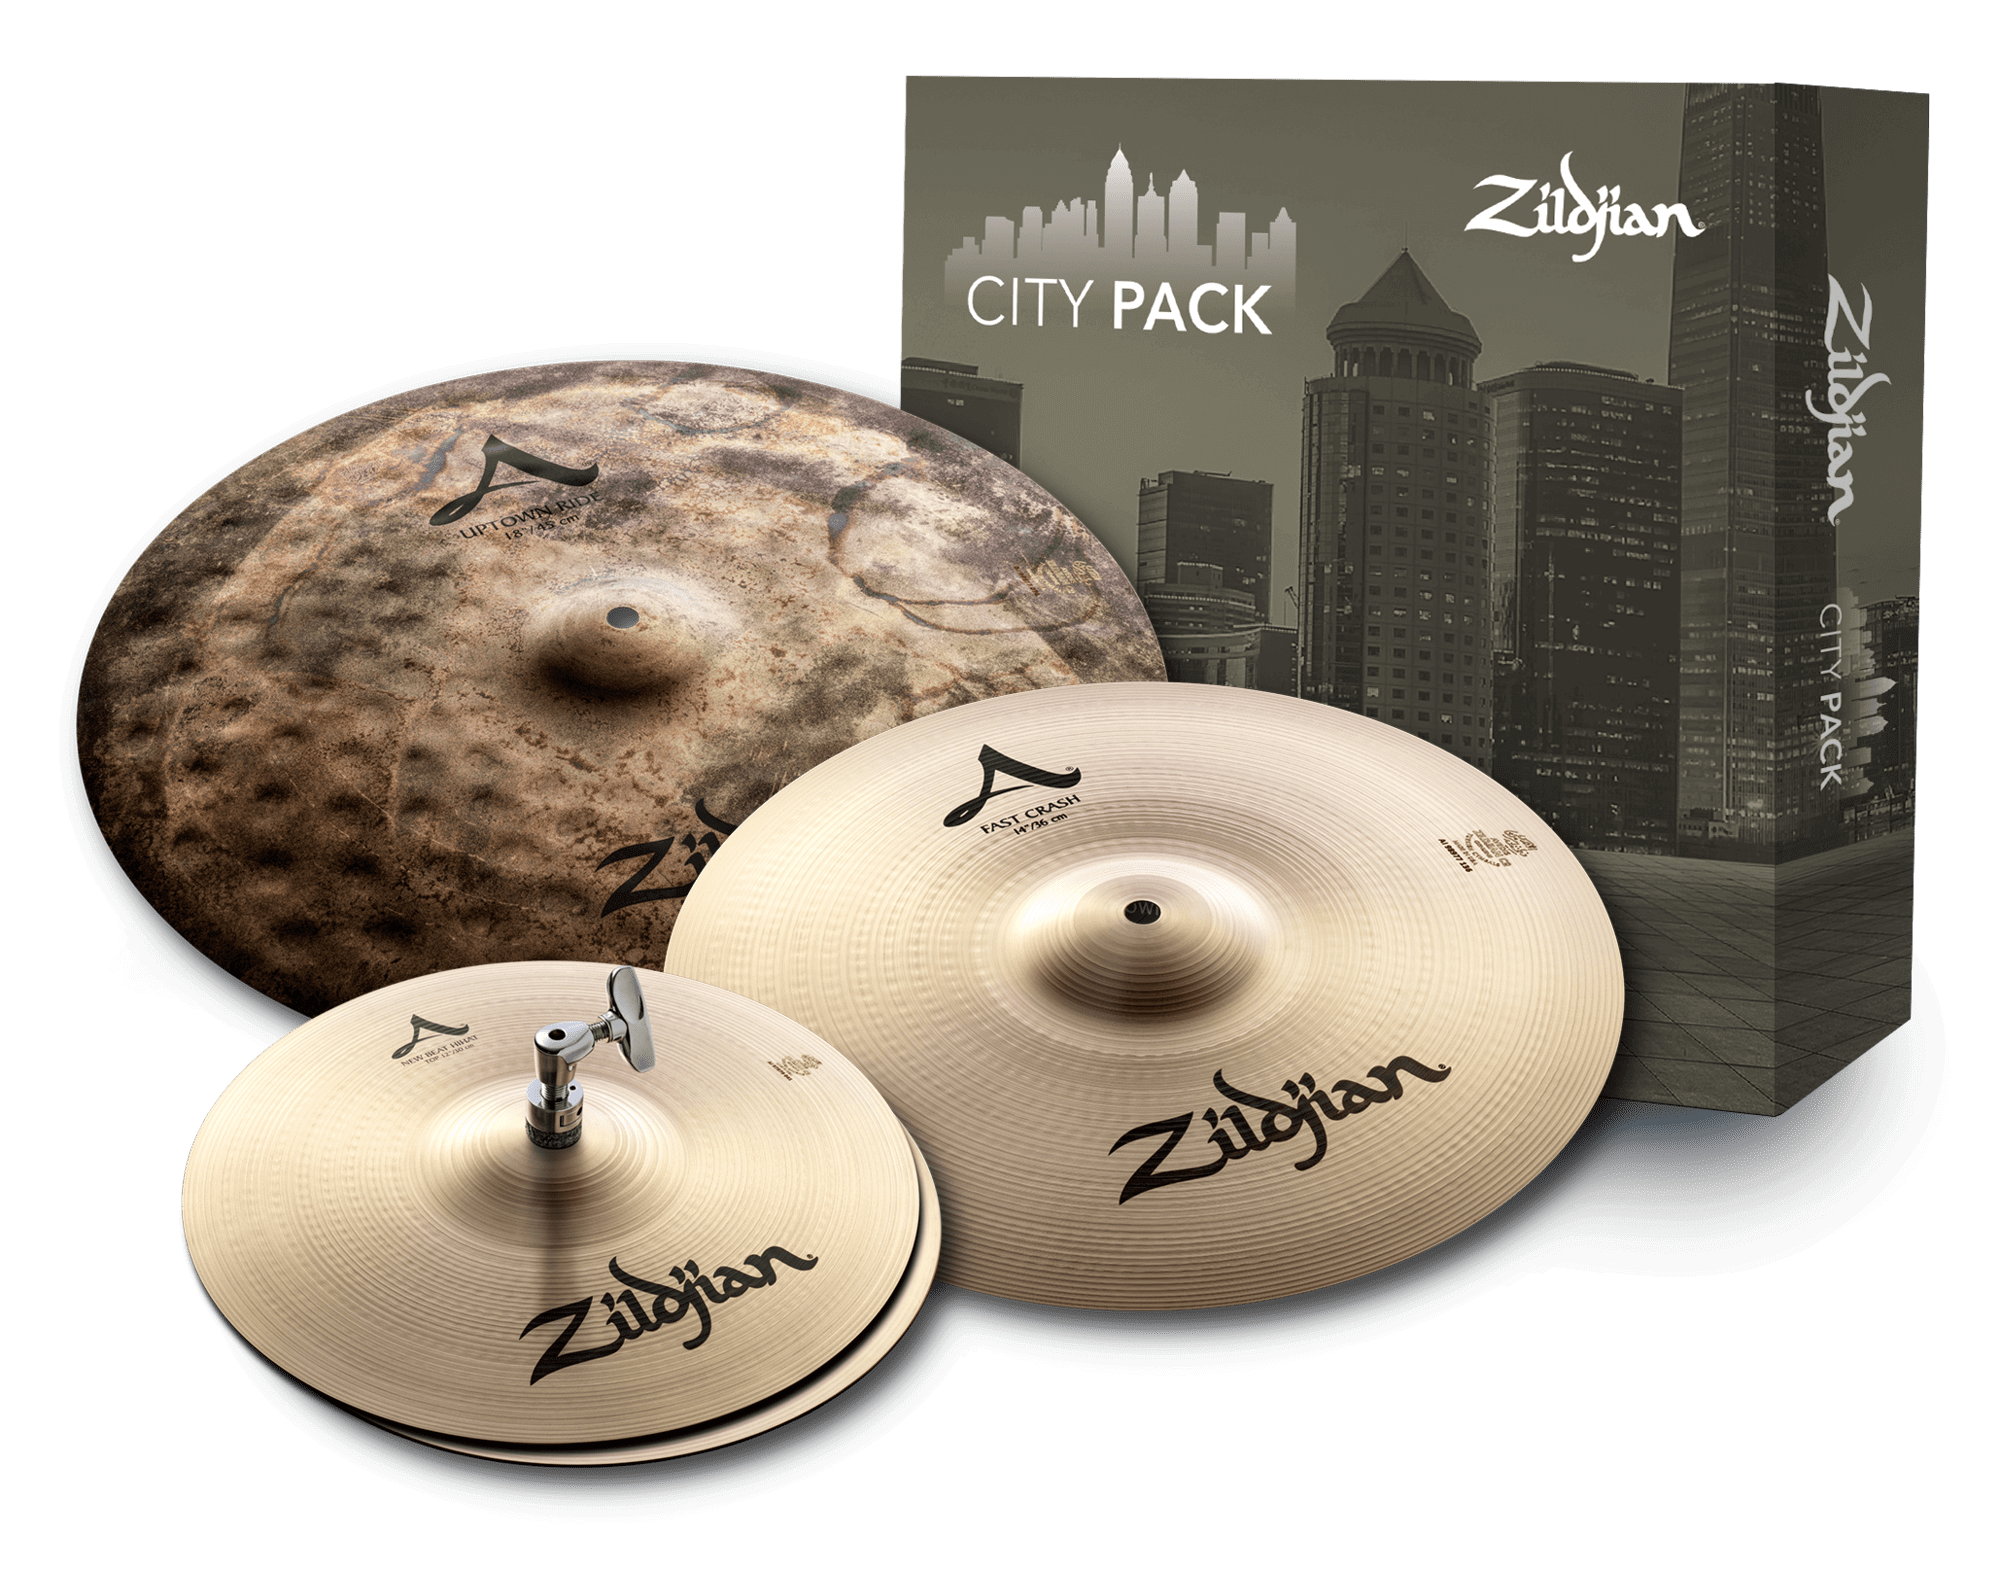 A Zildjian City Cymbal Pack